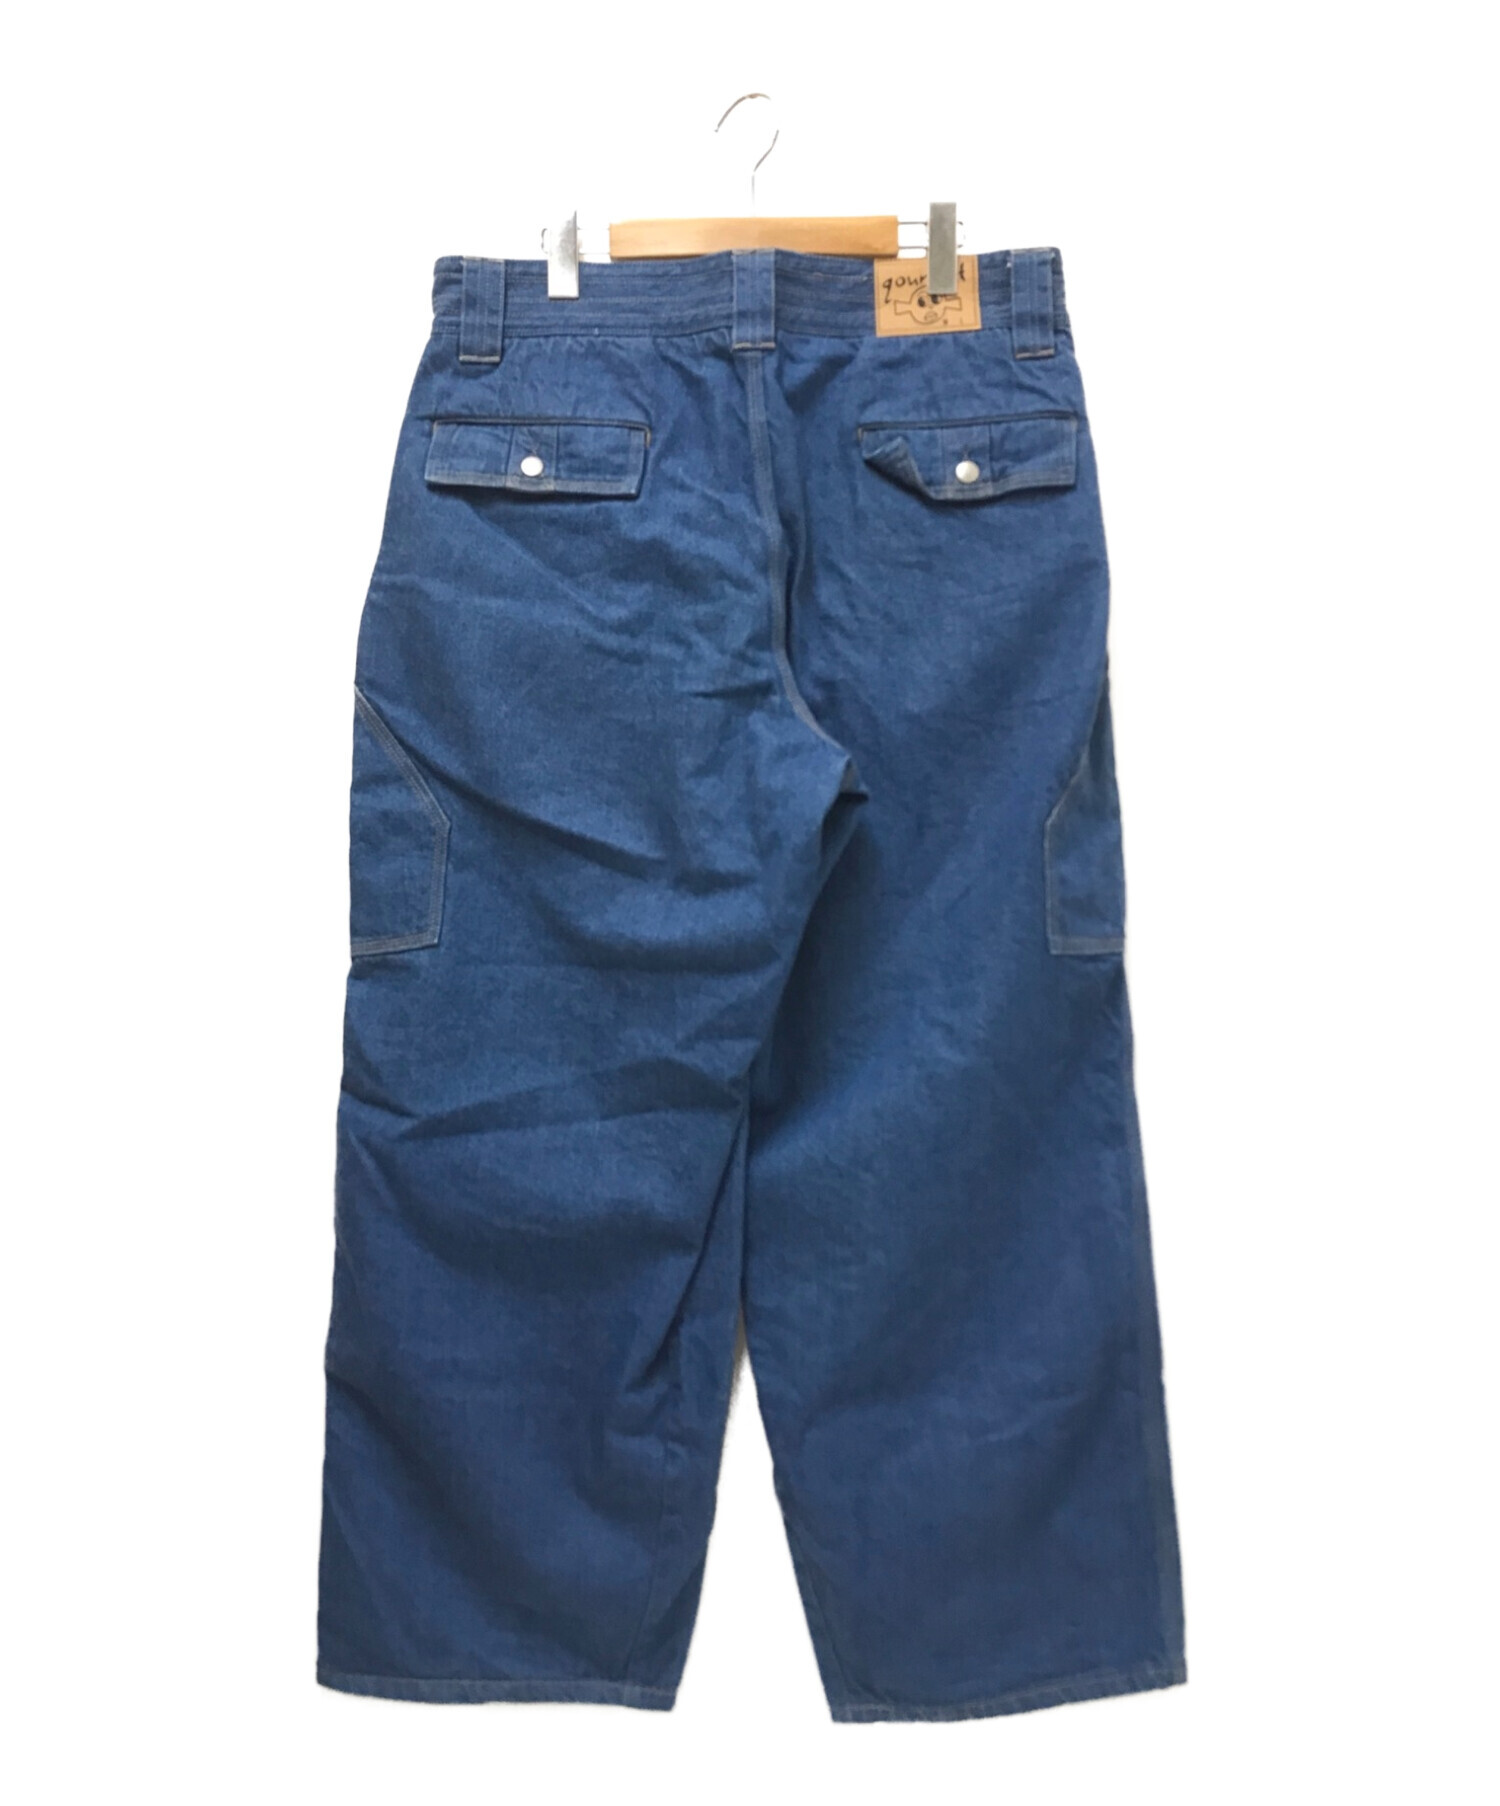 gourmet jeans TYPE2 BUSH ワイドデニムパンツ